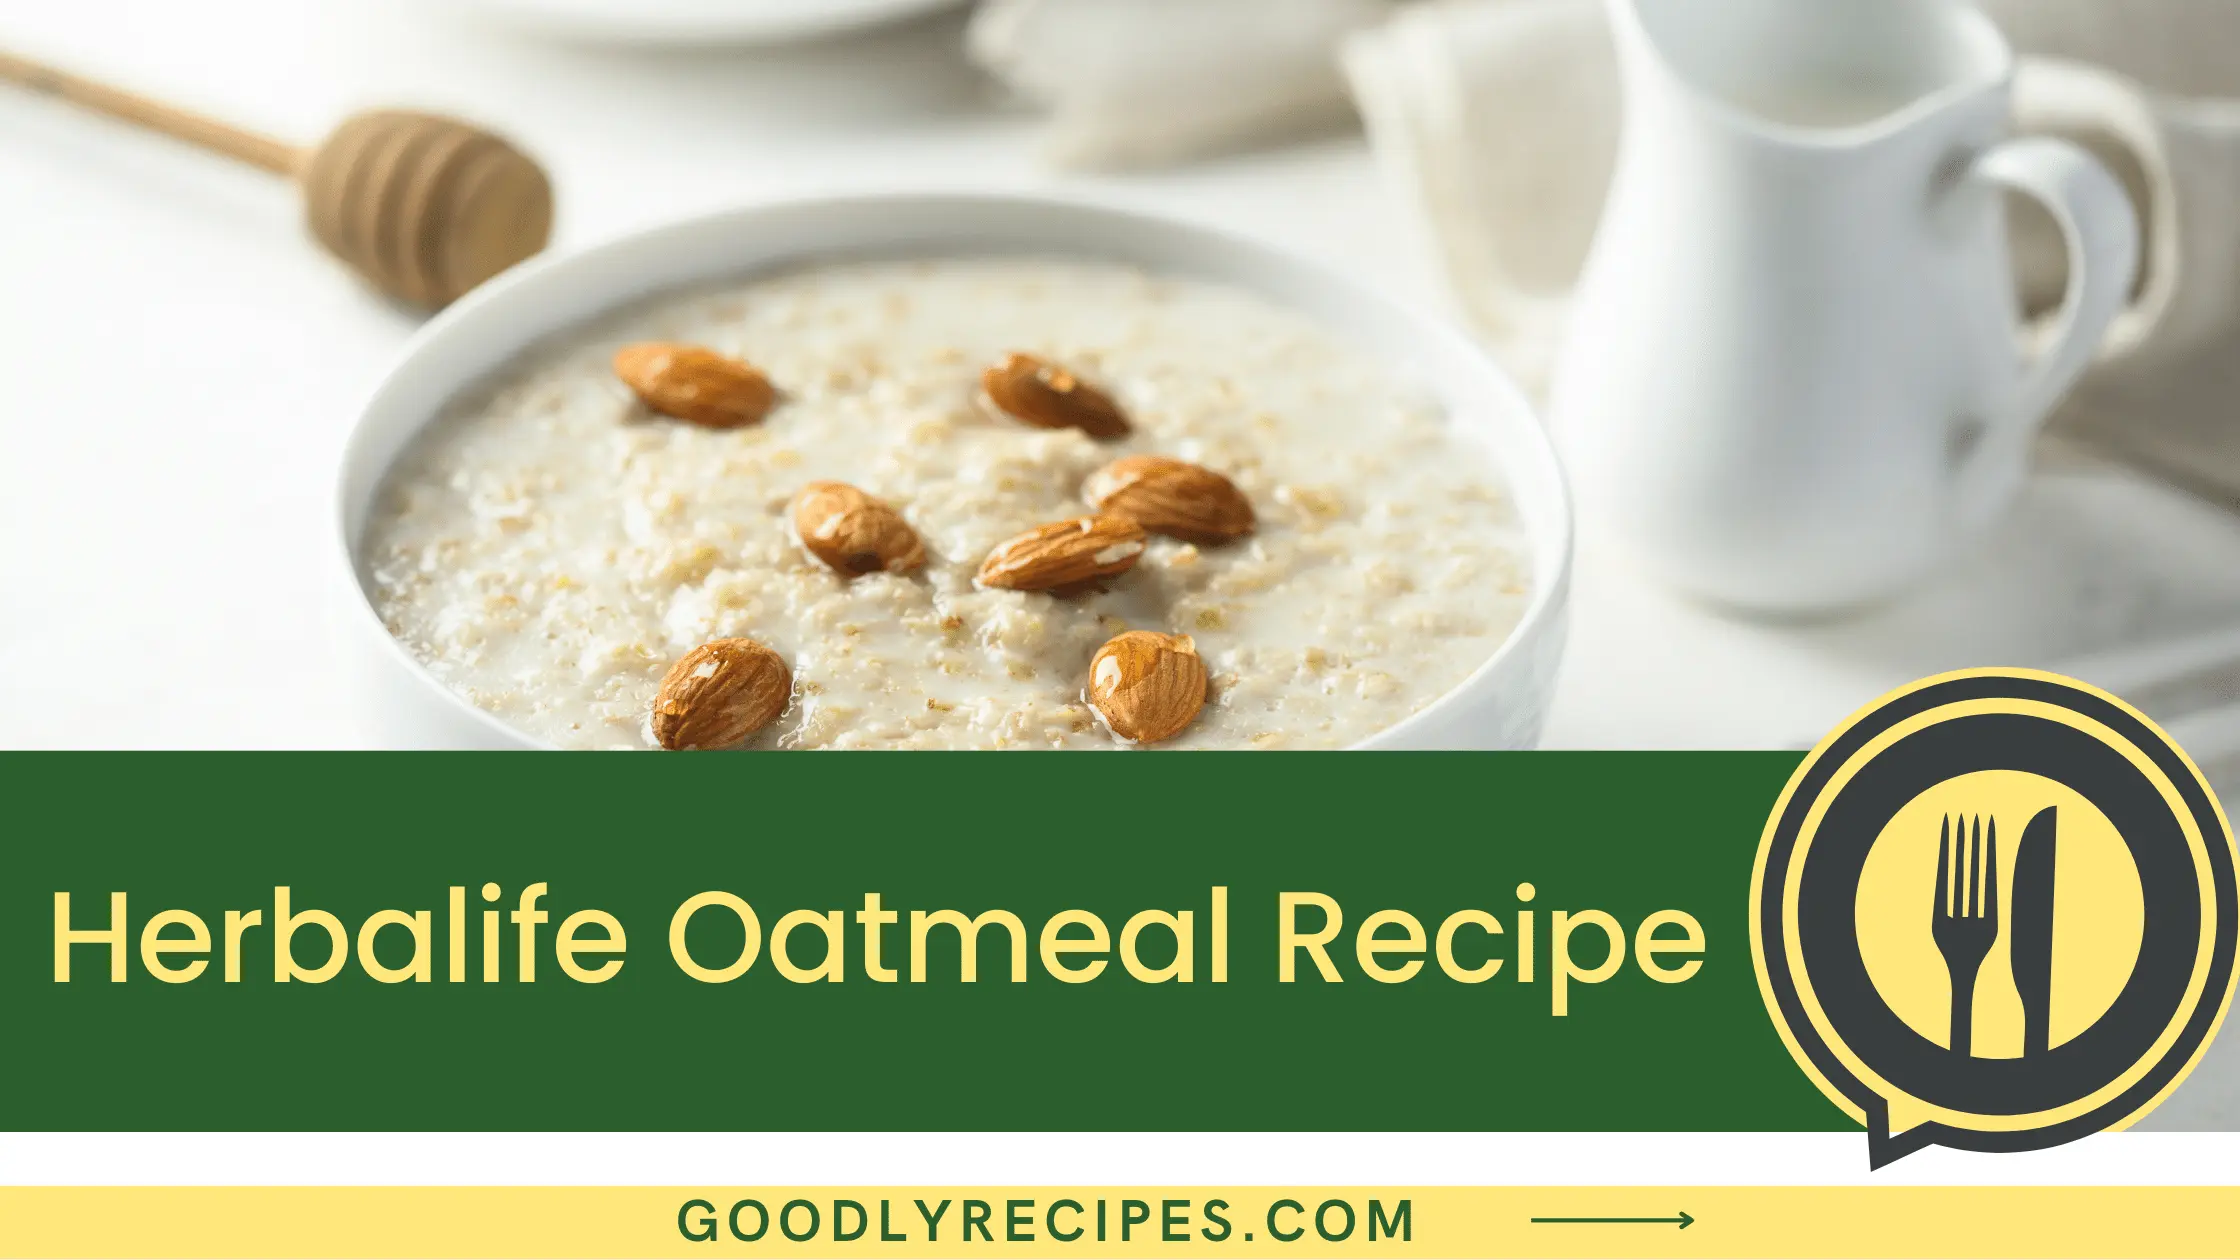 What is Herbalife Oatmeal?